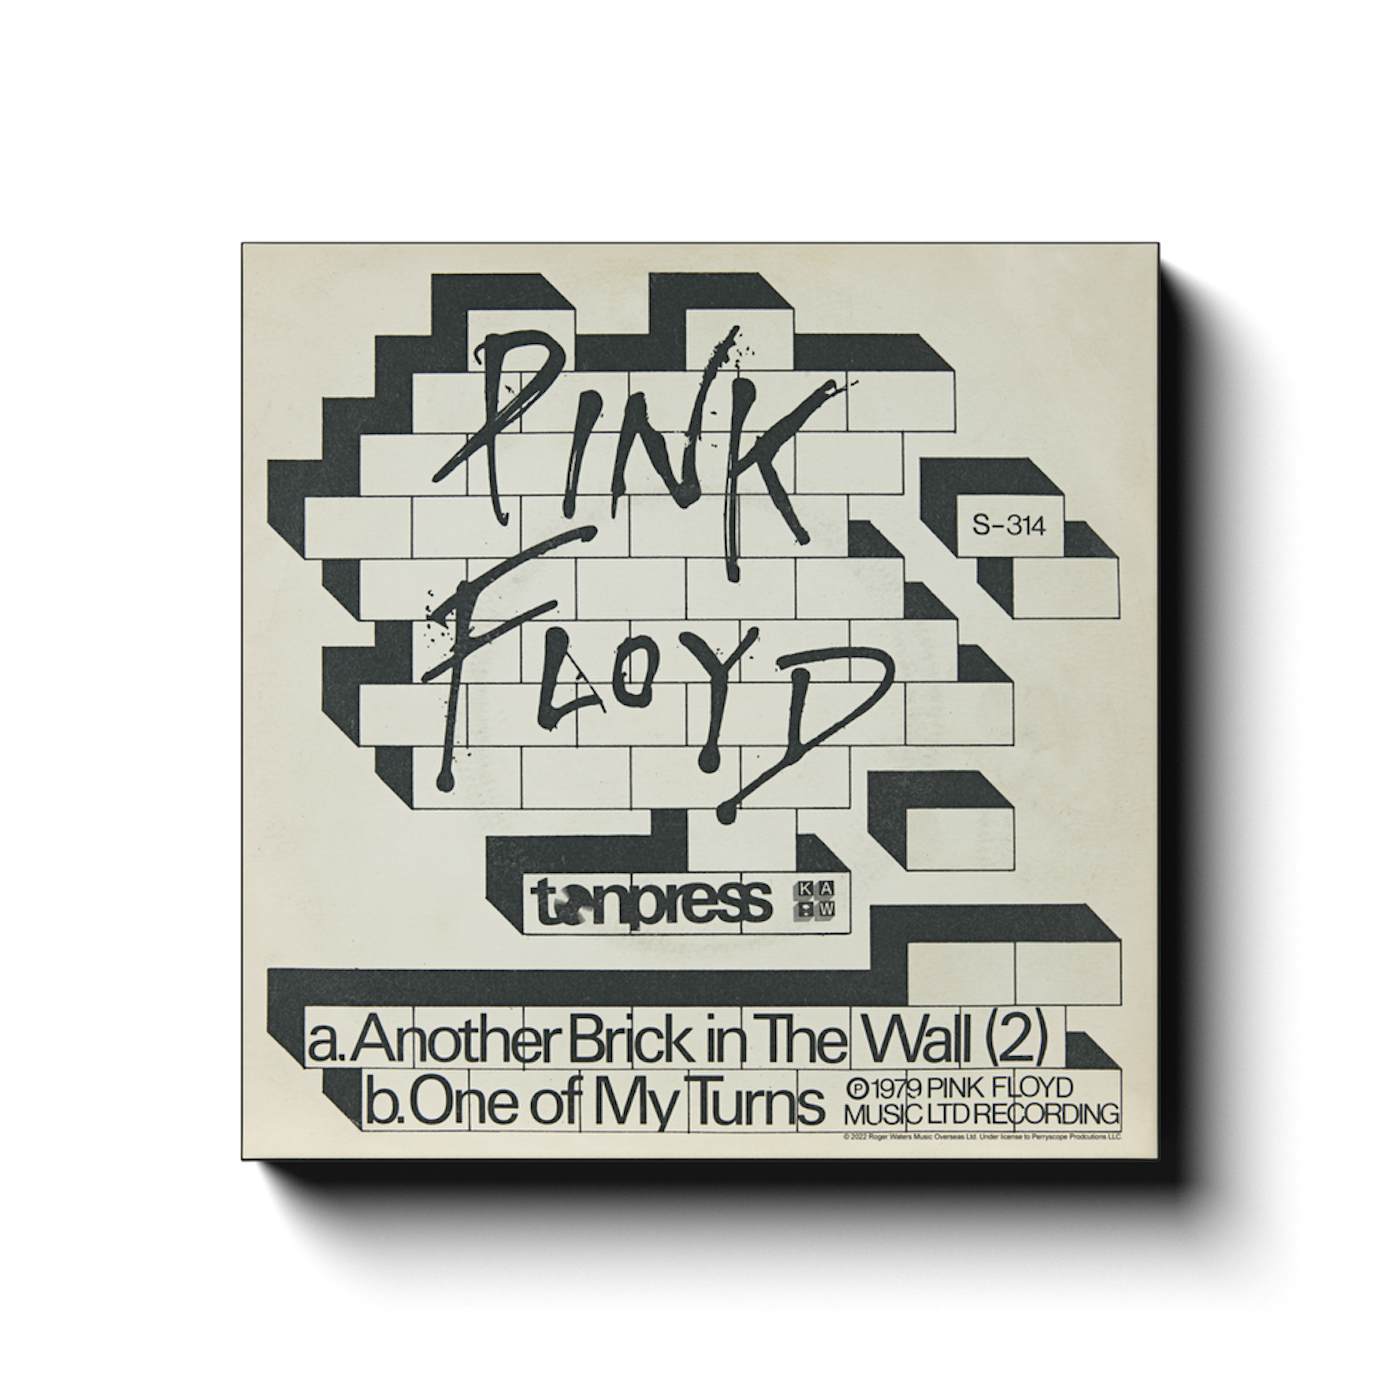 Pink Floyd English Rock Band - Pink Floyd English Rock Band - Sticker